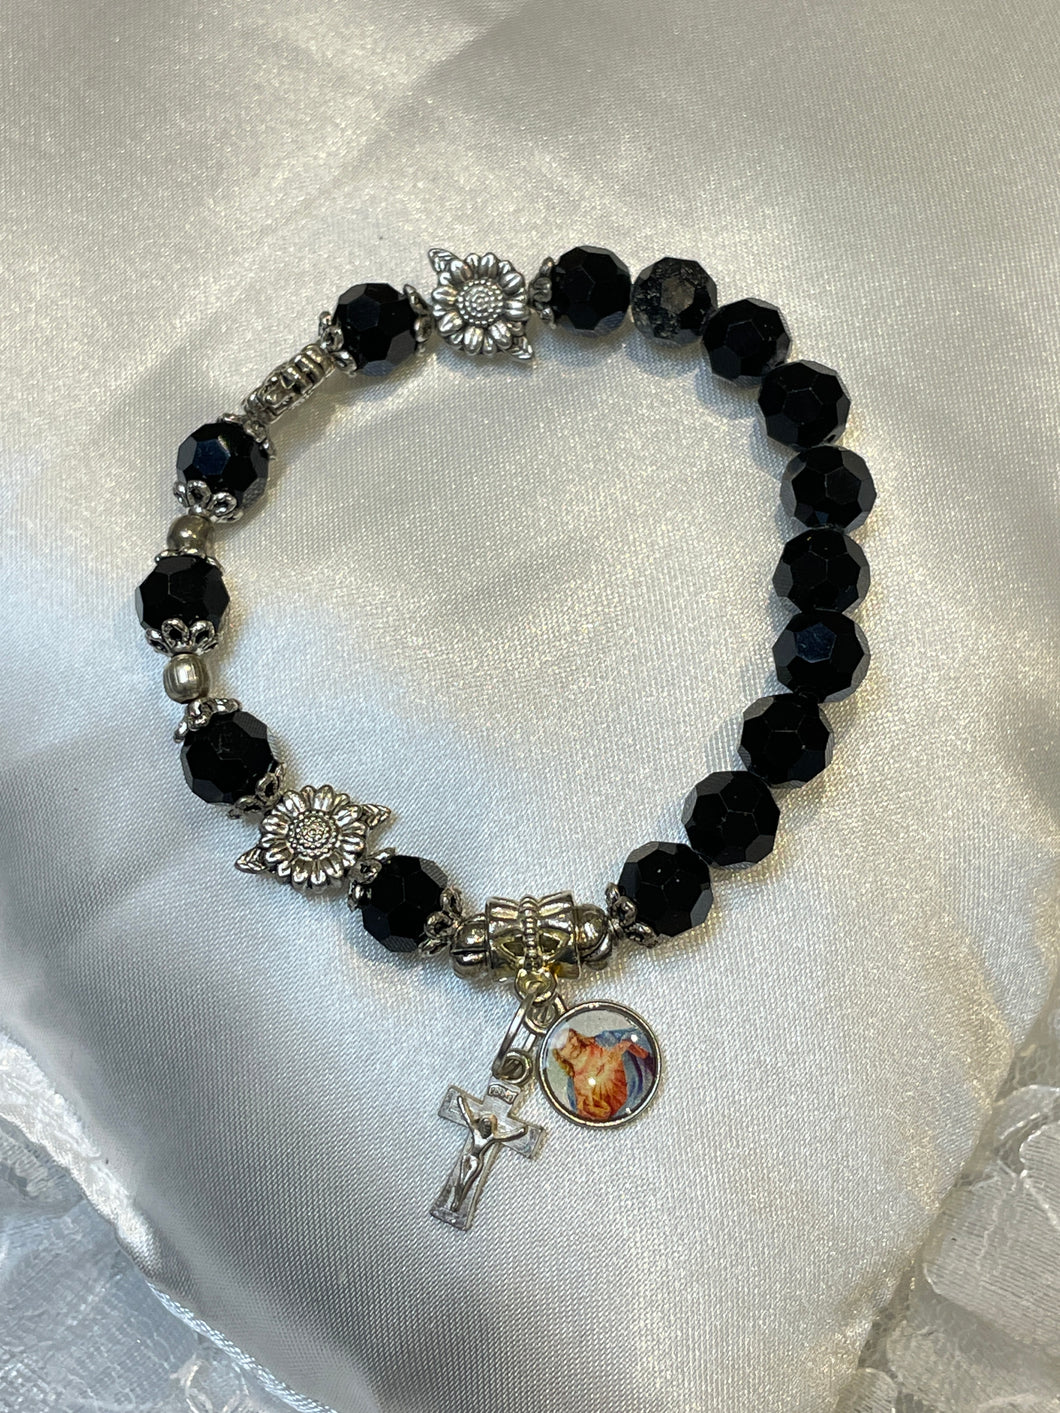 Black Gemstone Rosary Bracelet with Sacred Heart of Jesus Image Charm